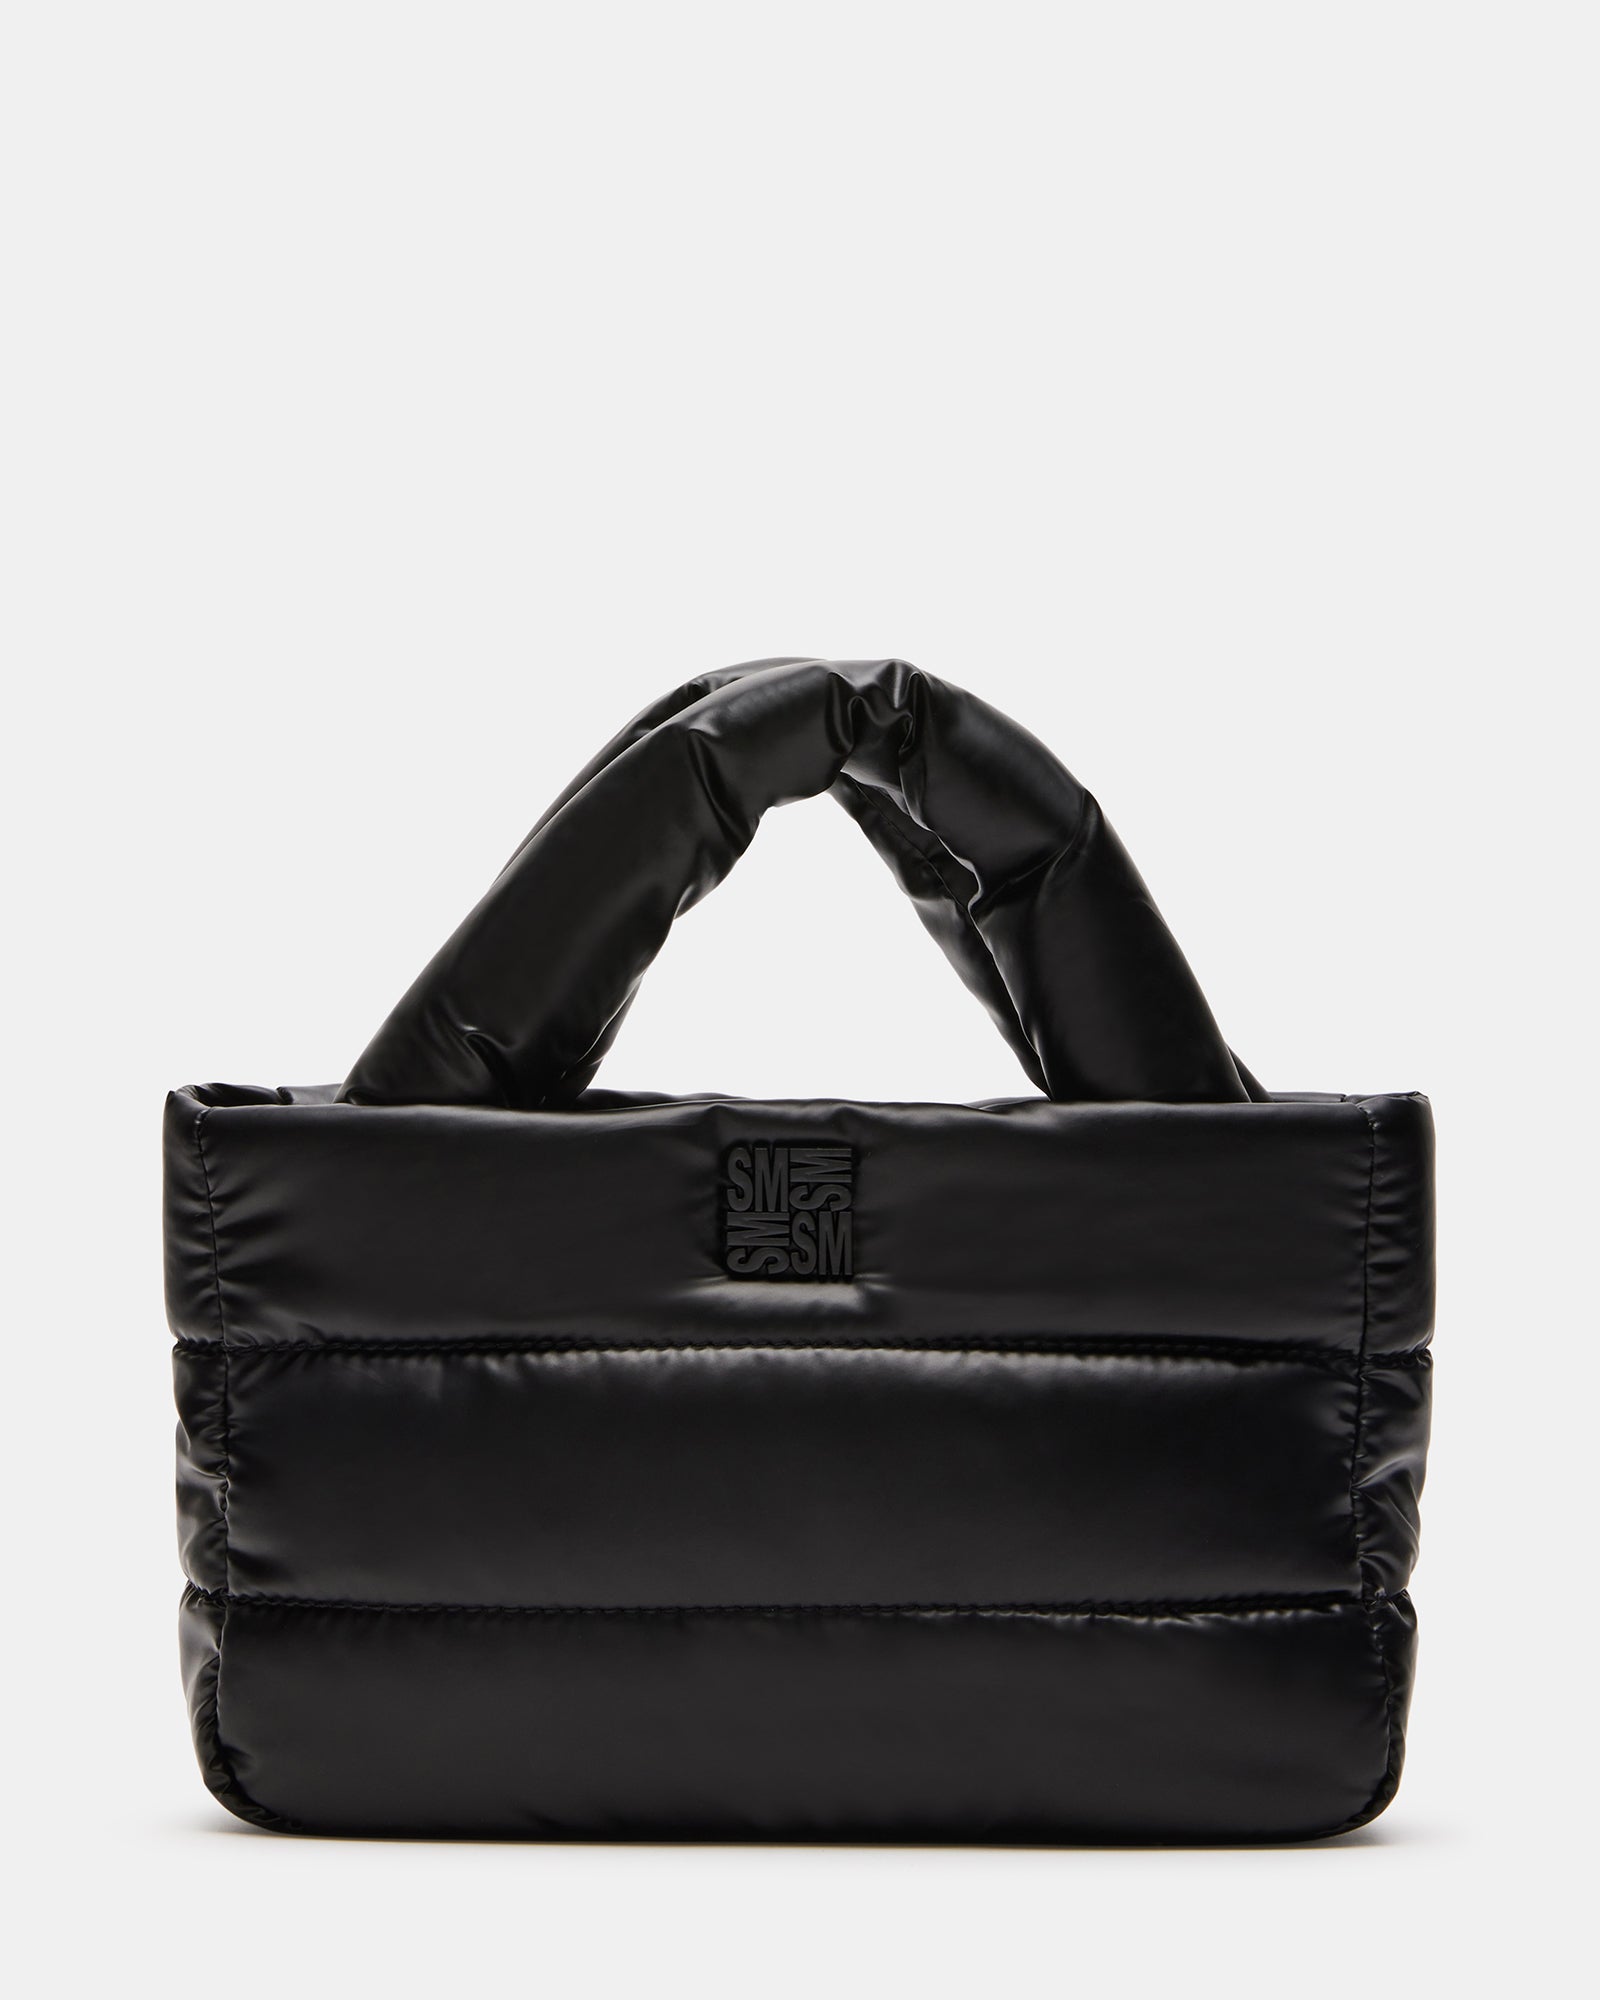 CHANEL Cocoon Bag in Black Nylon 2011